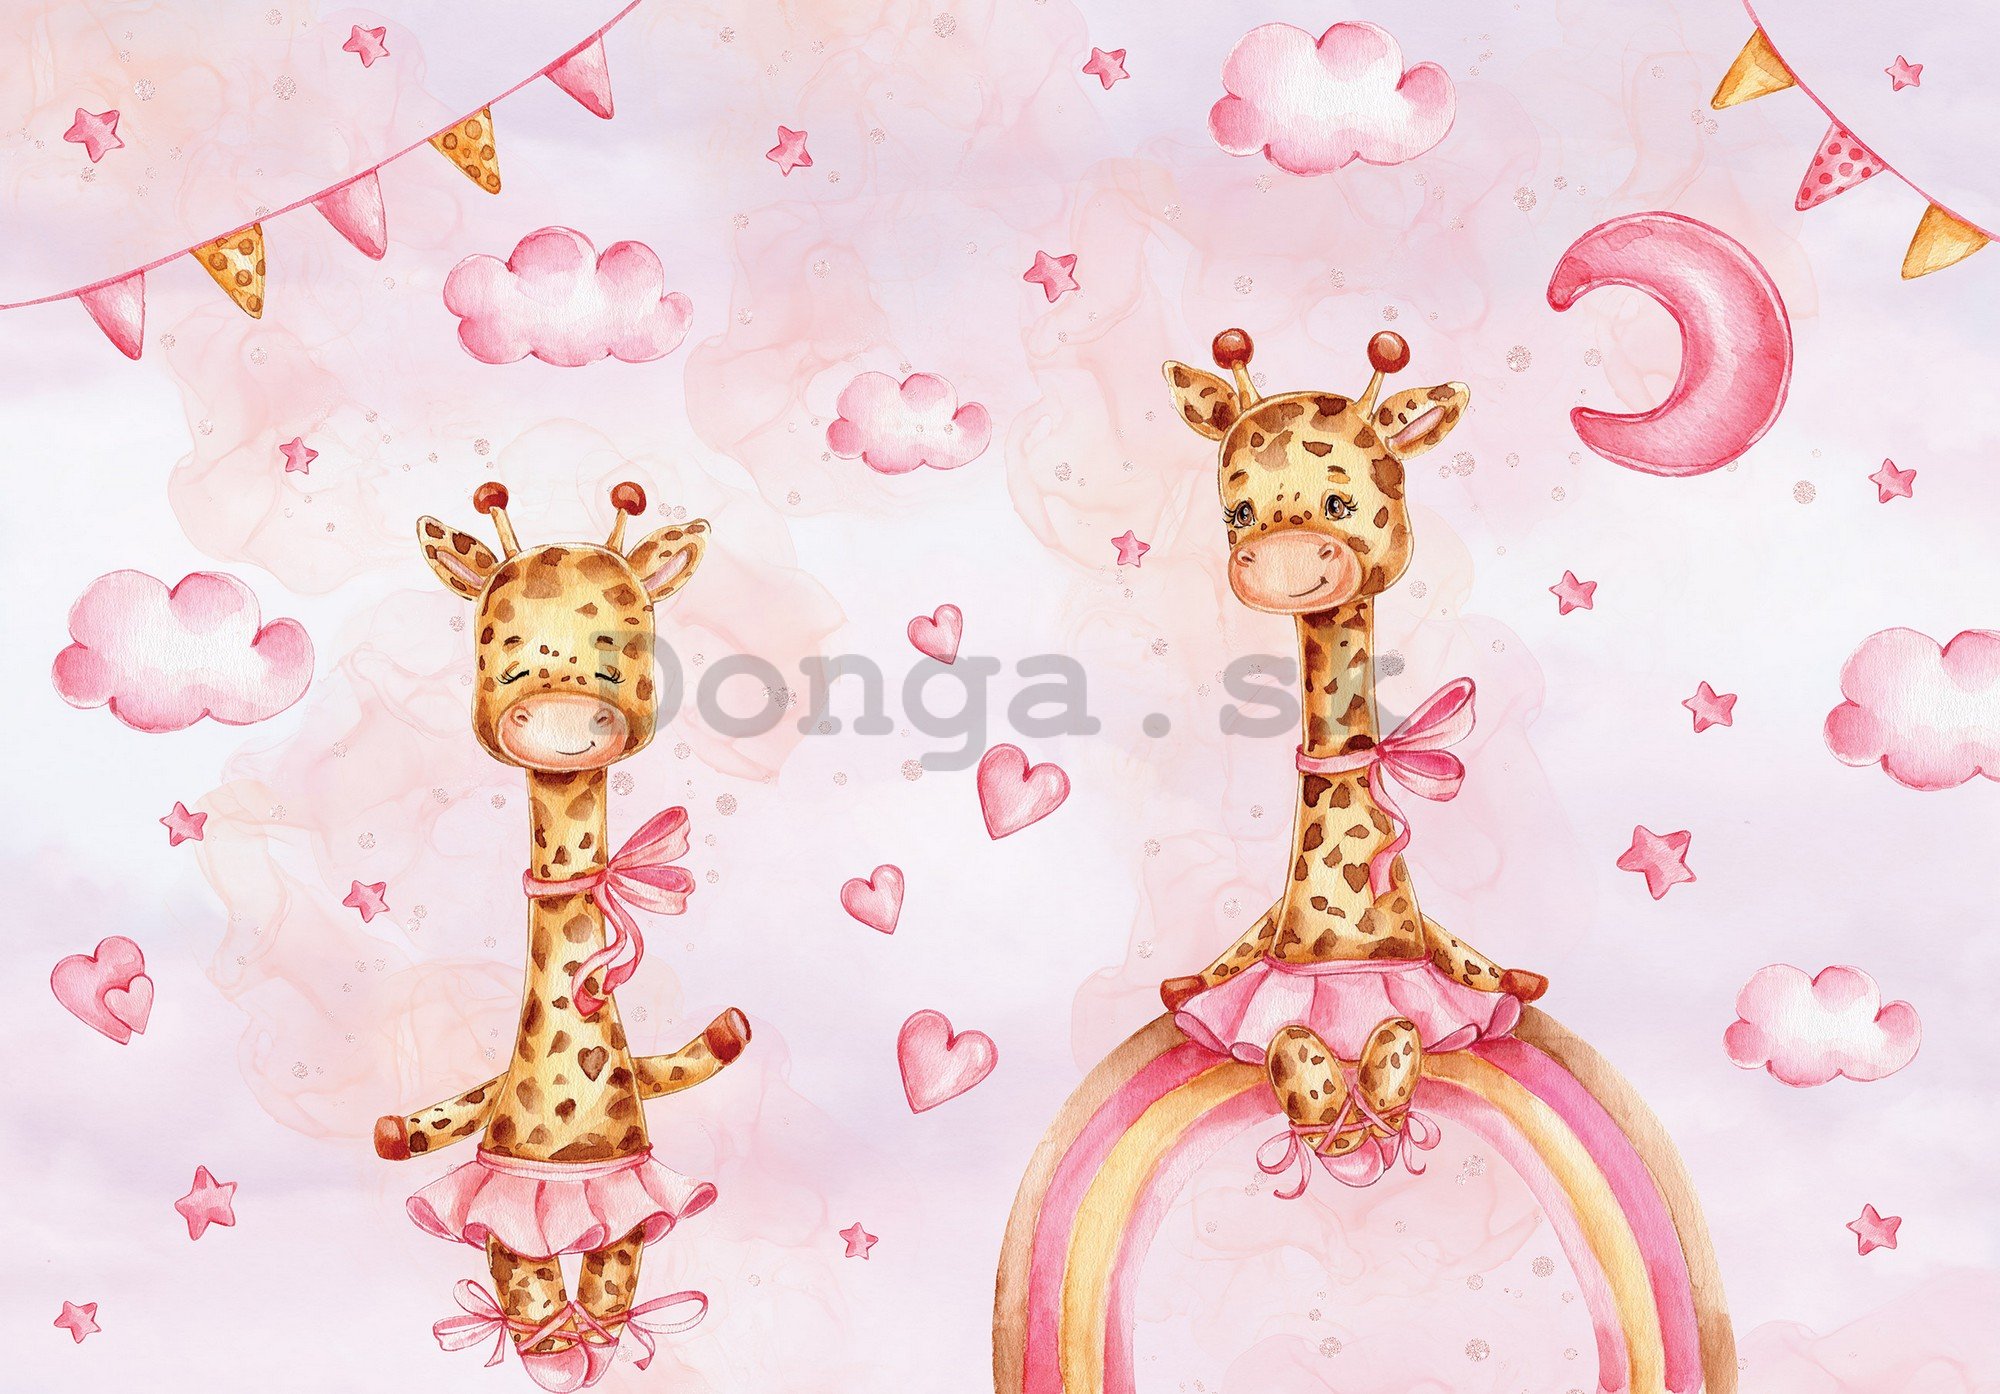 Fototapety vliesové: Children giraffe - 254x184 cm